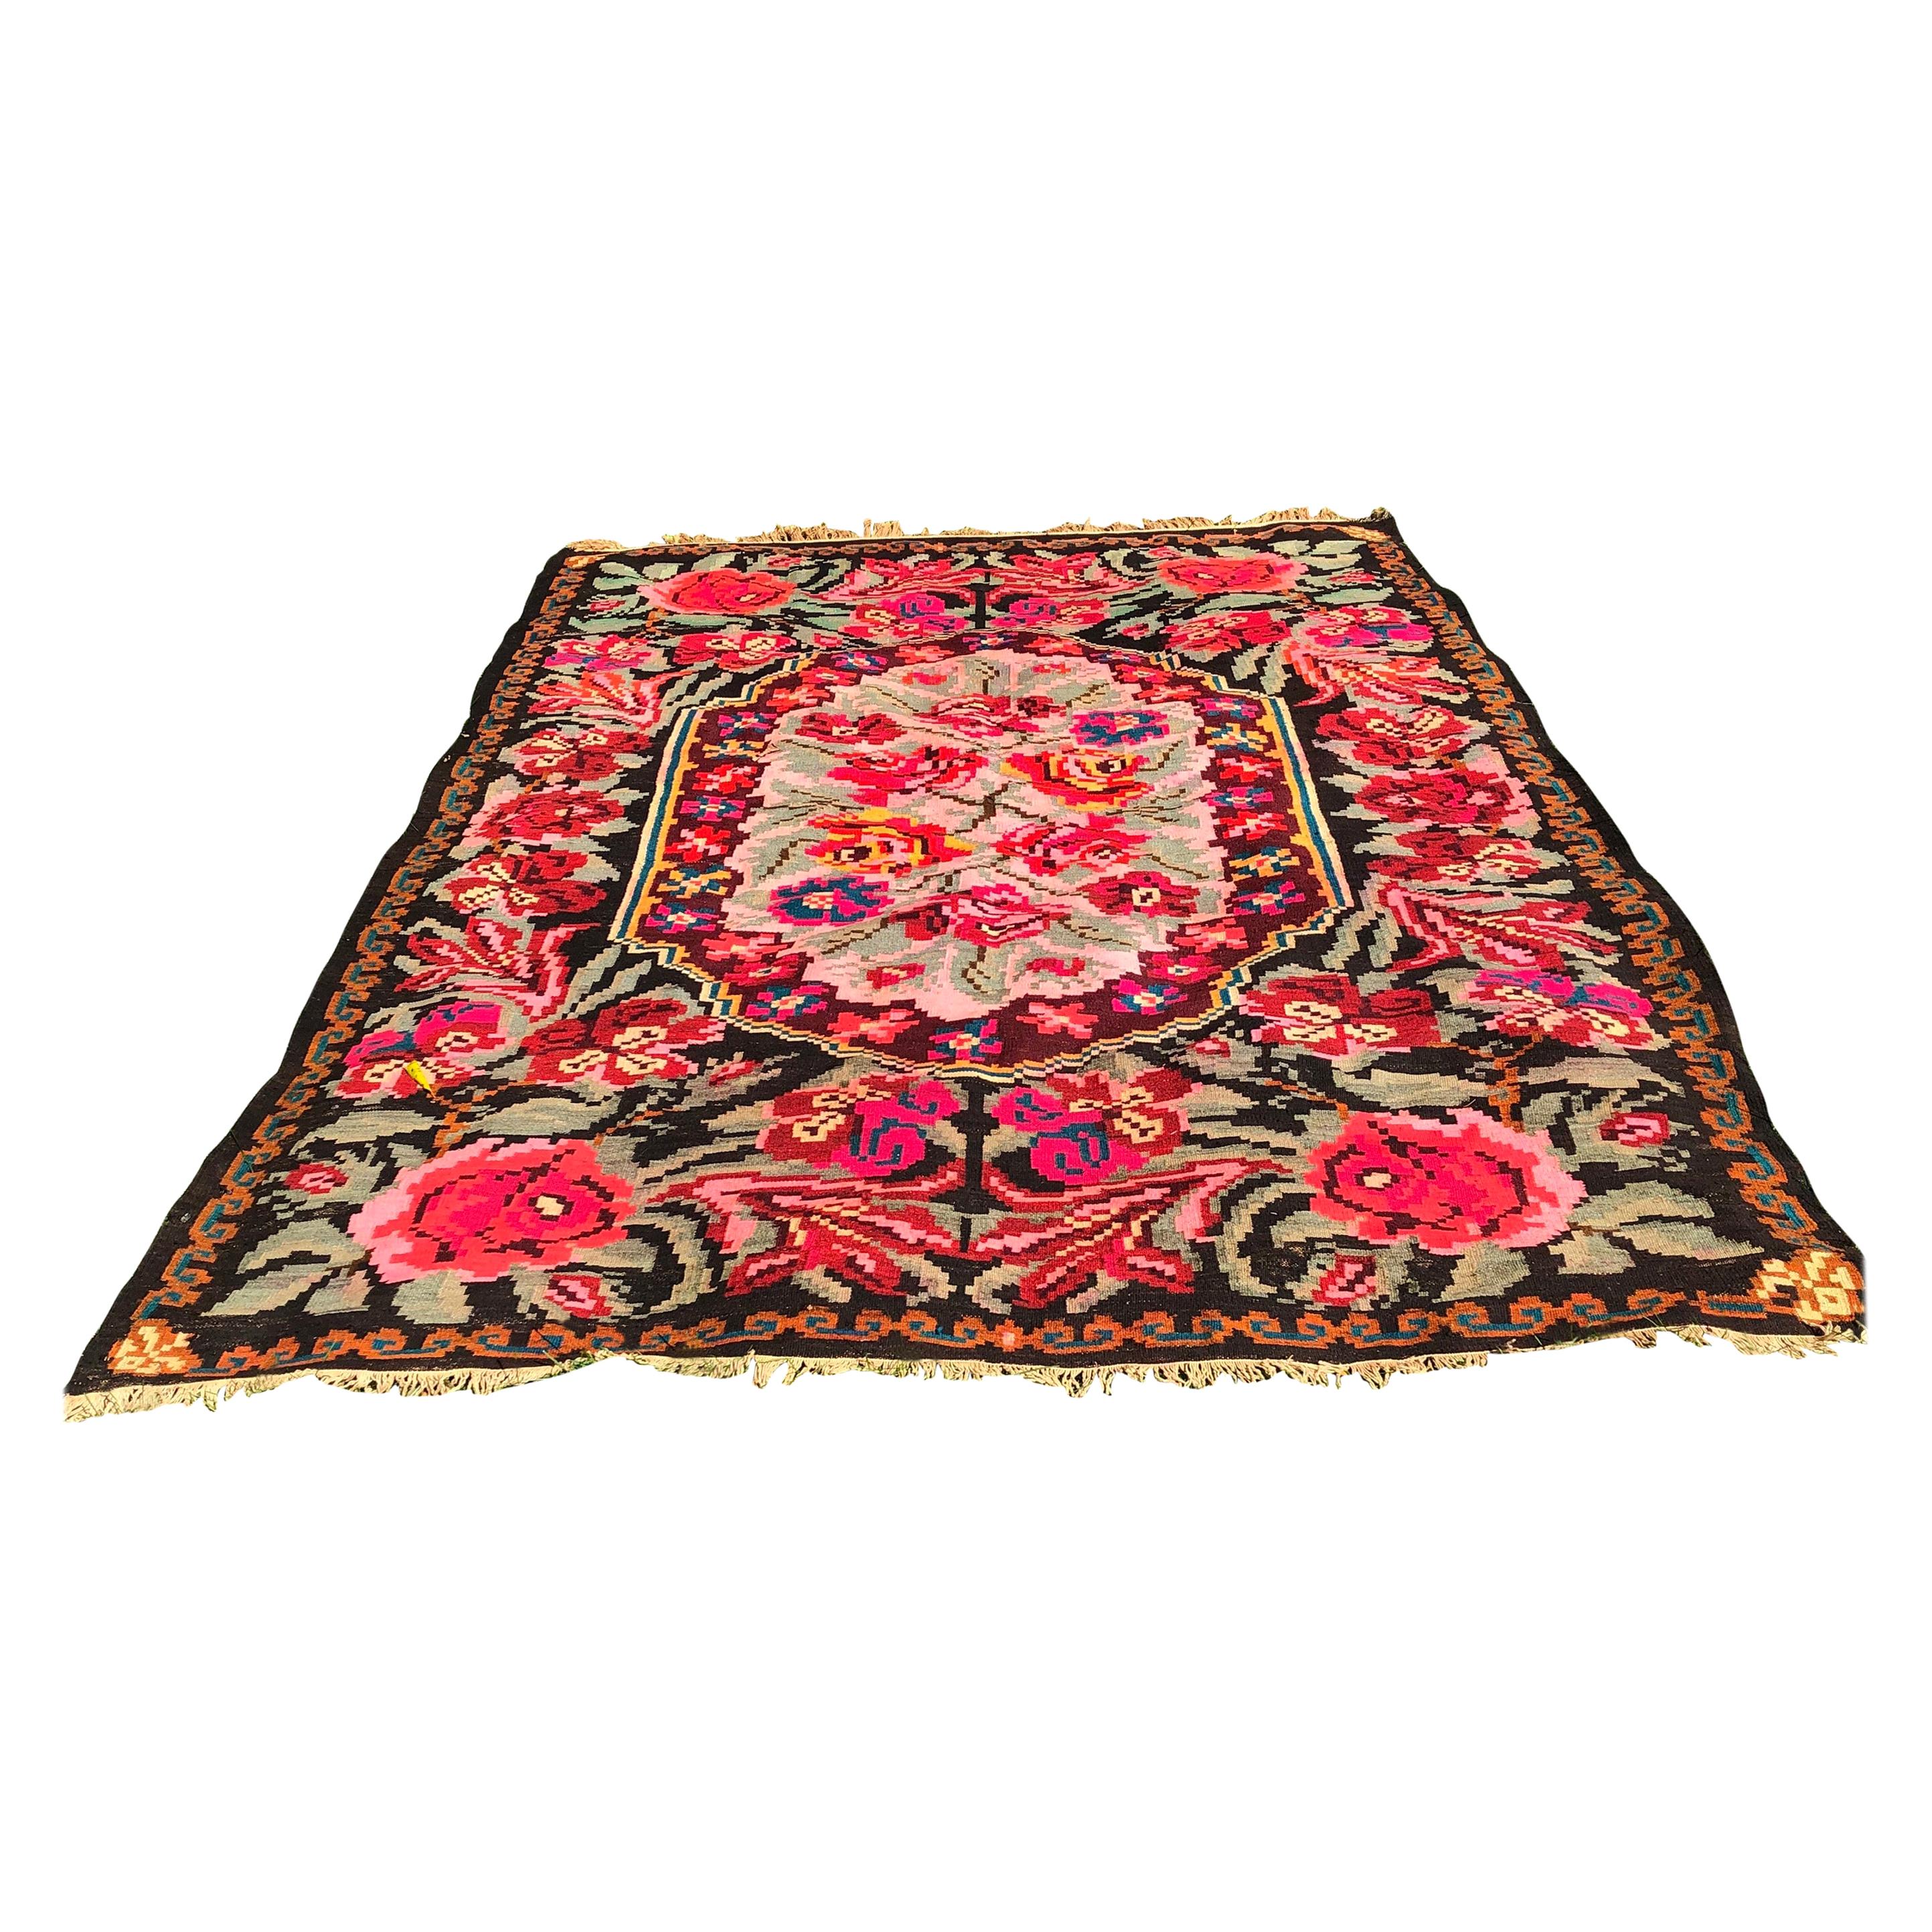 Colorful Room Sized Floral Kilim Carpet For Sale